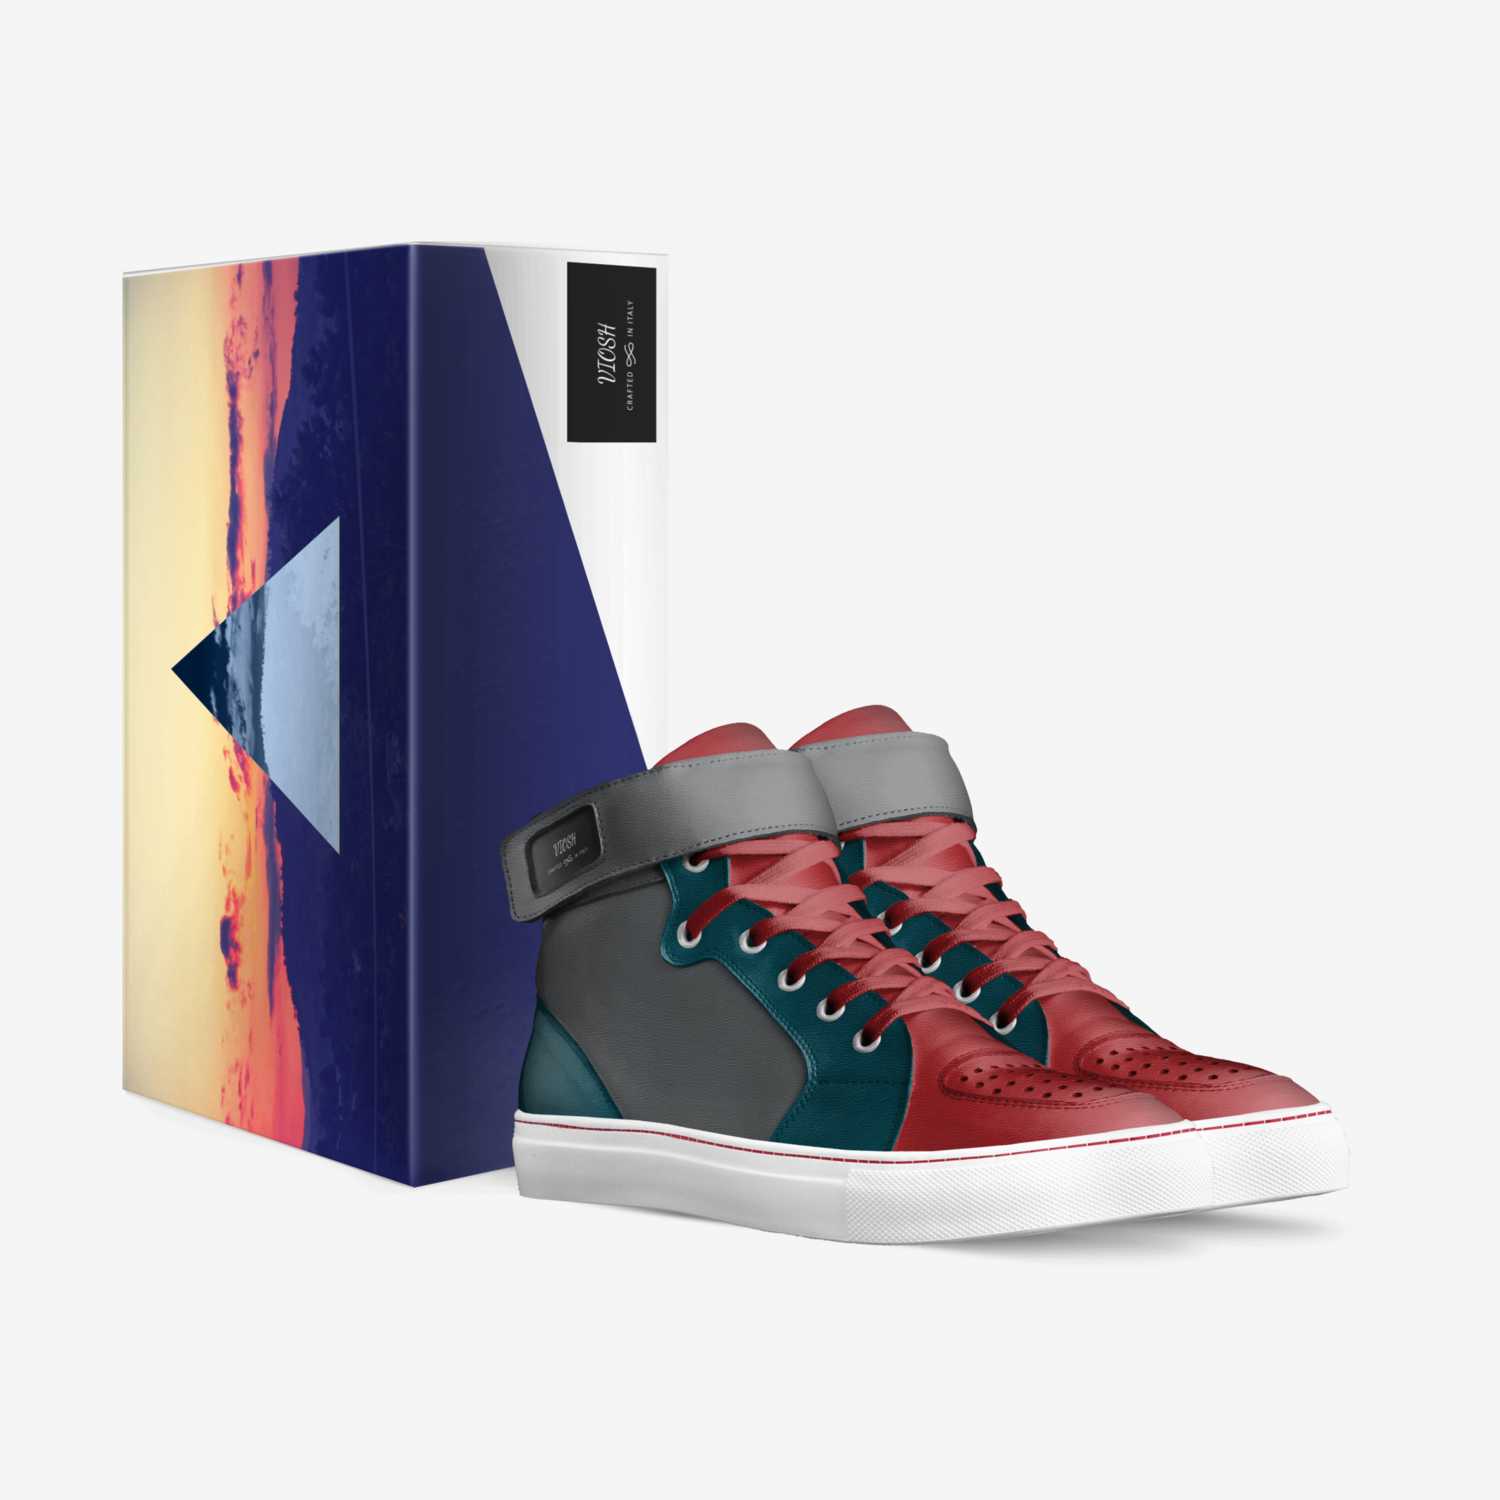 VIOSH custom made in Italy shoes by Mauricio Cordova | Box view